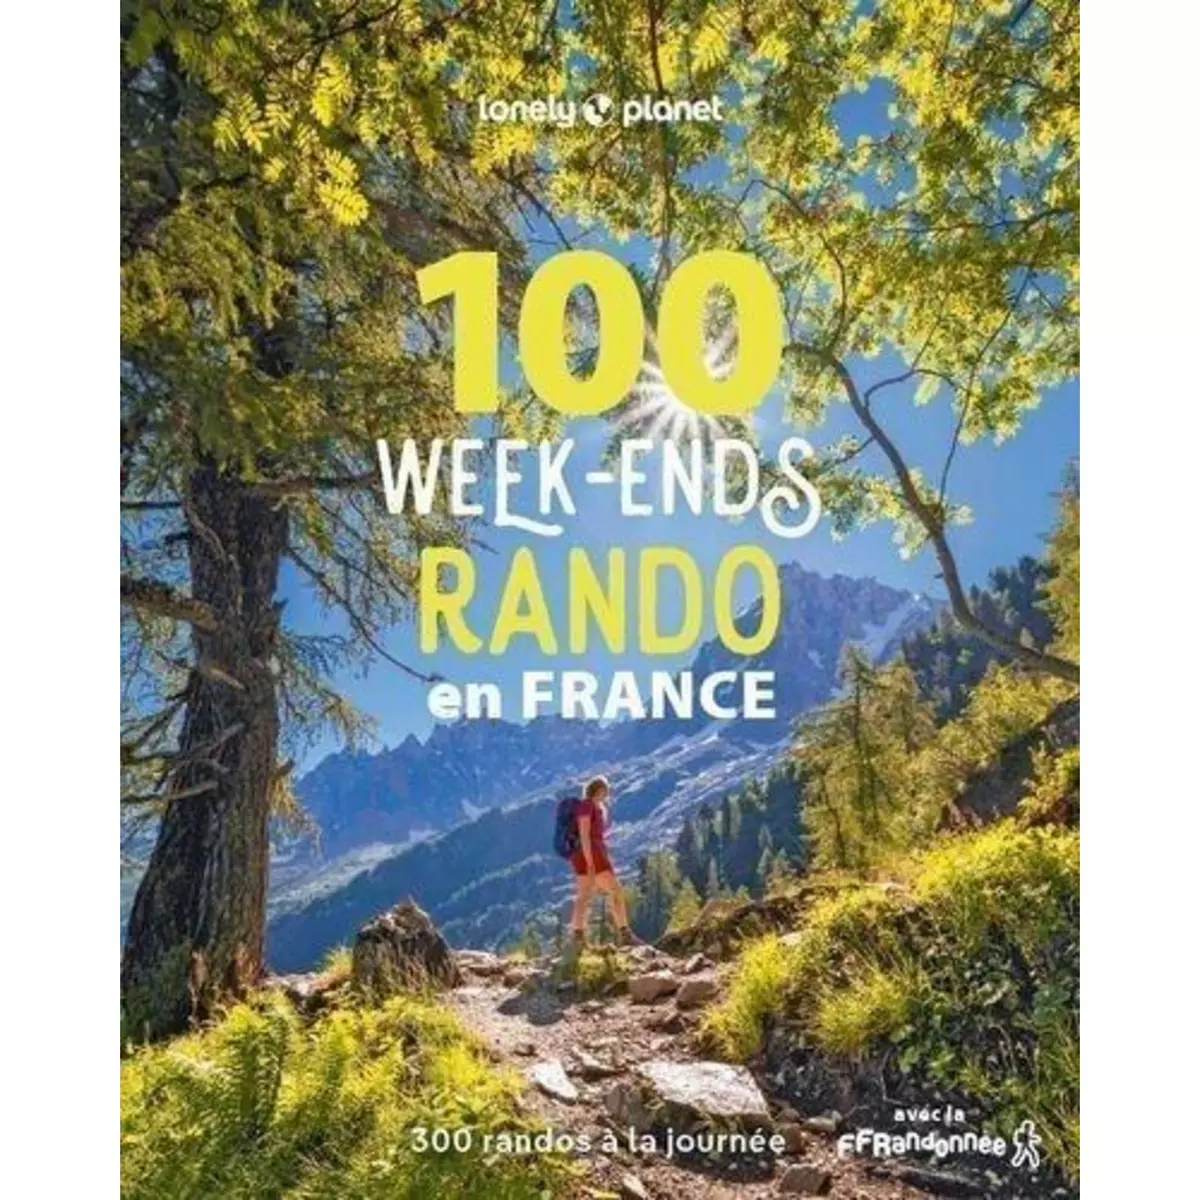  100 WEEK-ENDS RANDO EN FRANCE, FFRandonnée